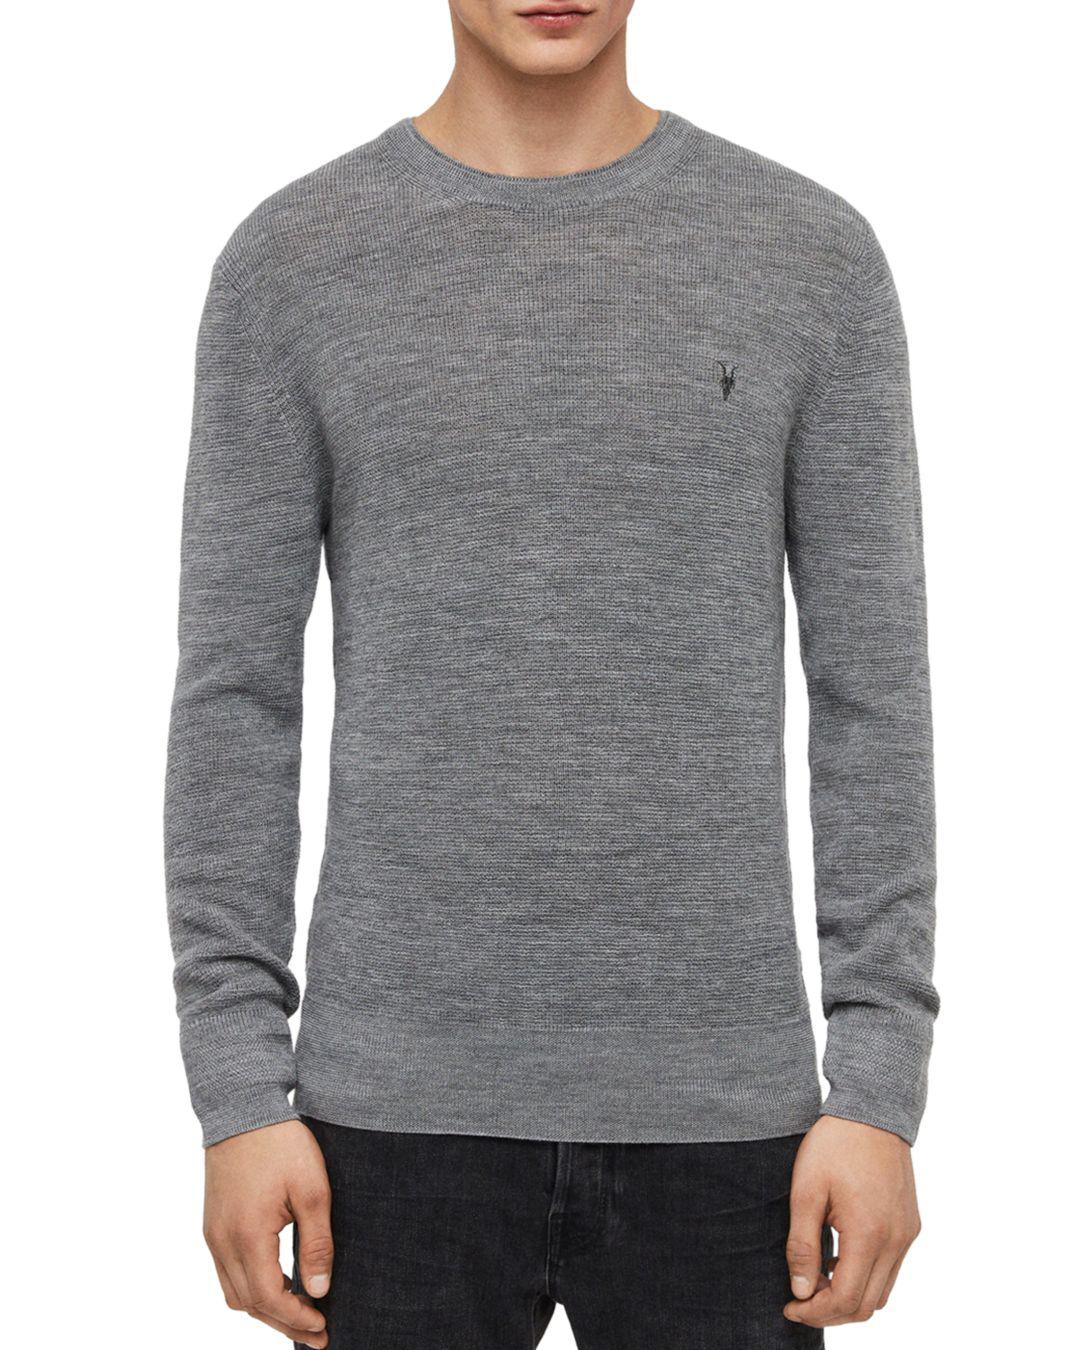 AllSaints Ivar Merino Wool Crewneck Sweater in Grey Marl (Gray) for Men ...